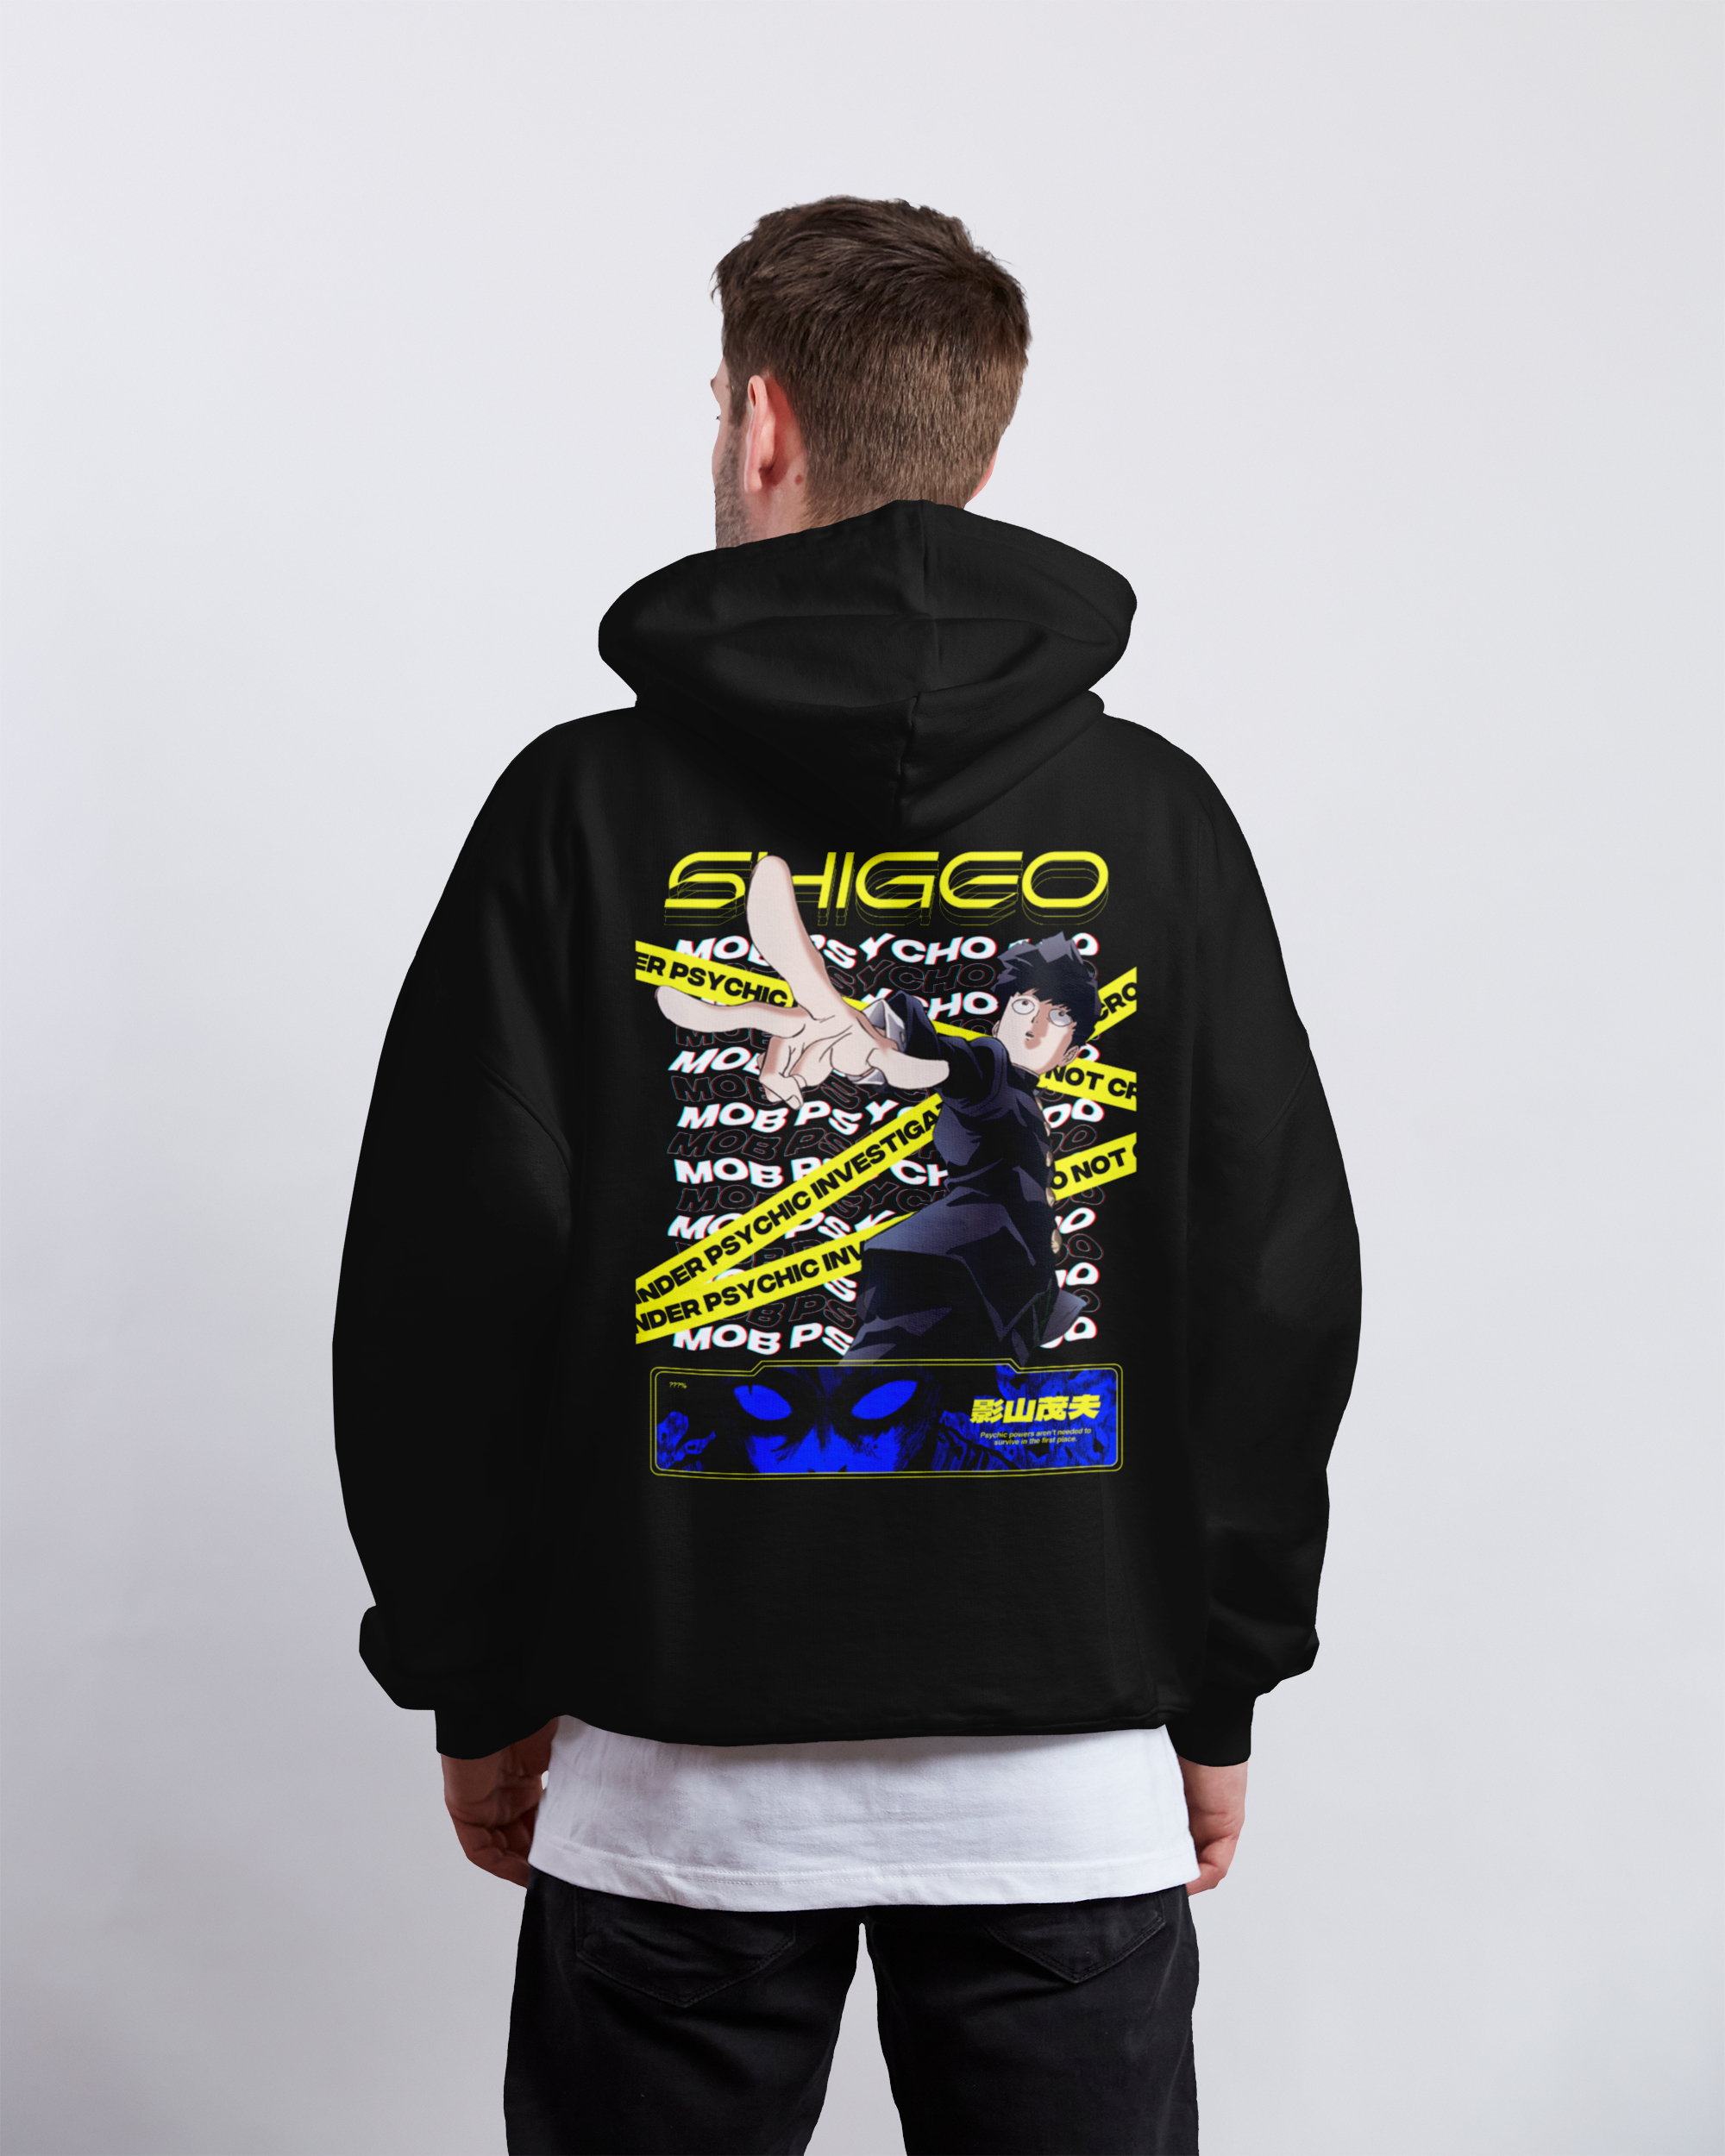 Shiggo Mob Psycho 100 | Hoodie